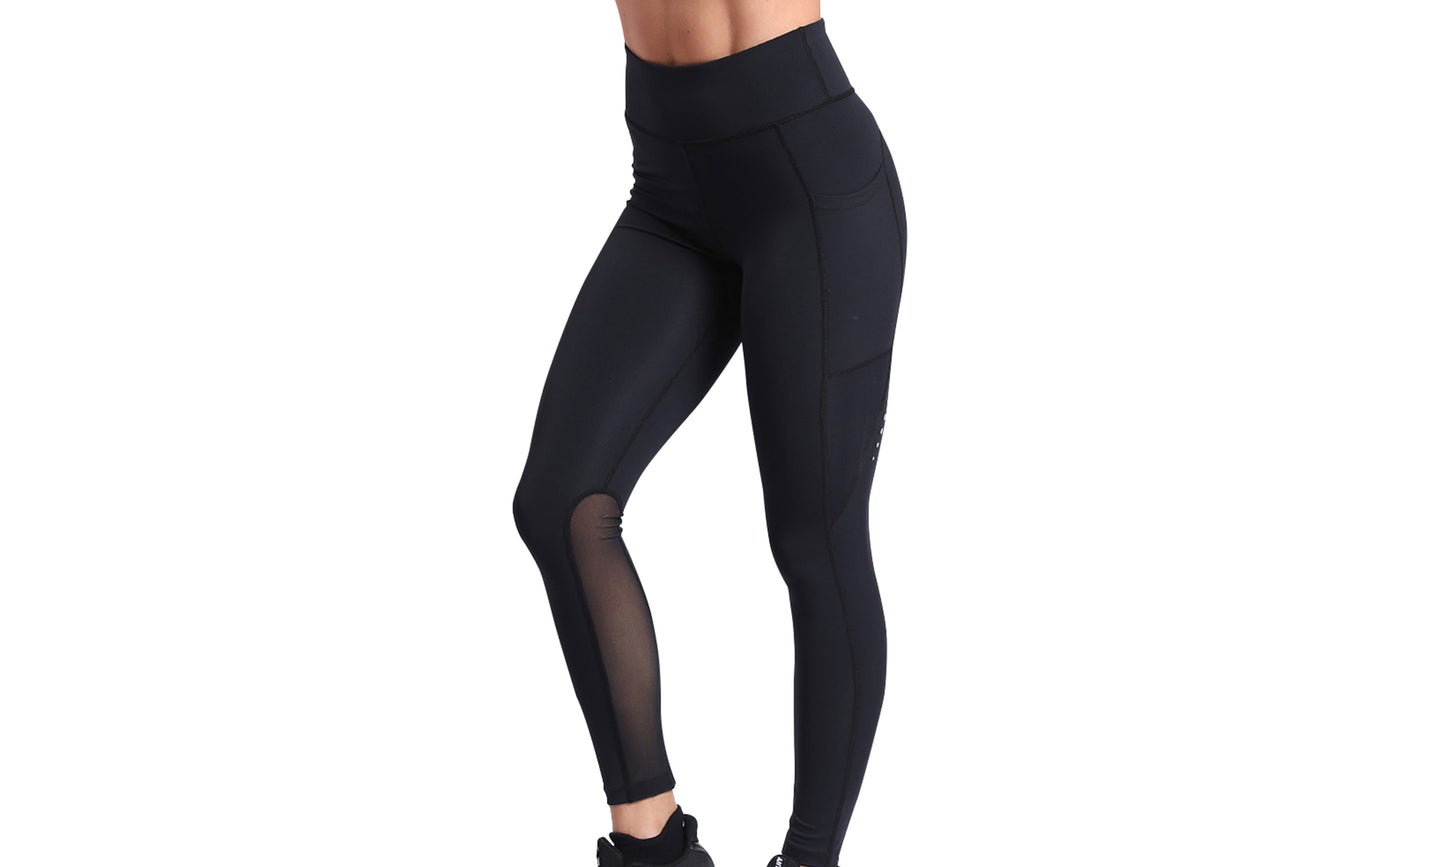 High Waist Yoga Pants Tummy Control Workout Pants for Women Leggings